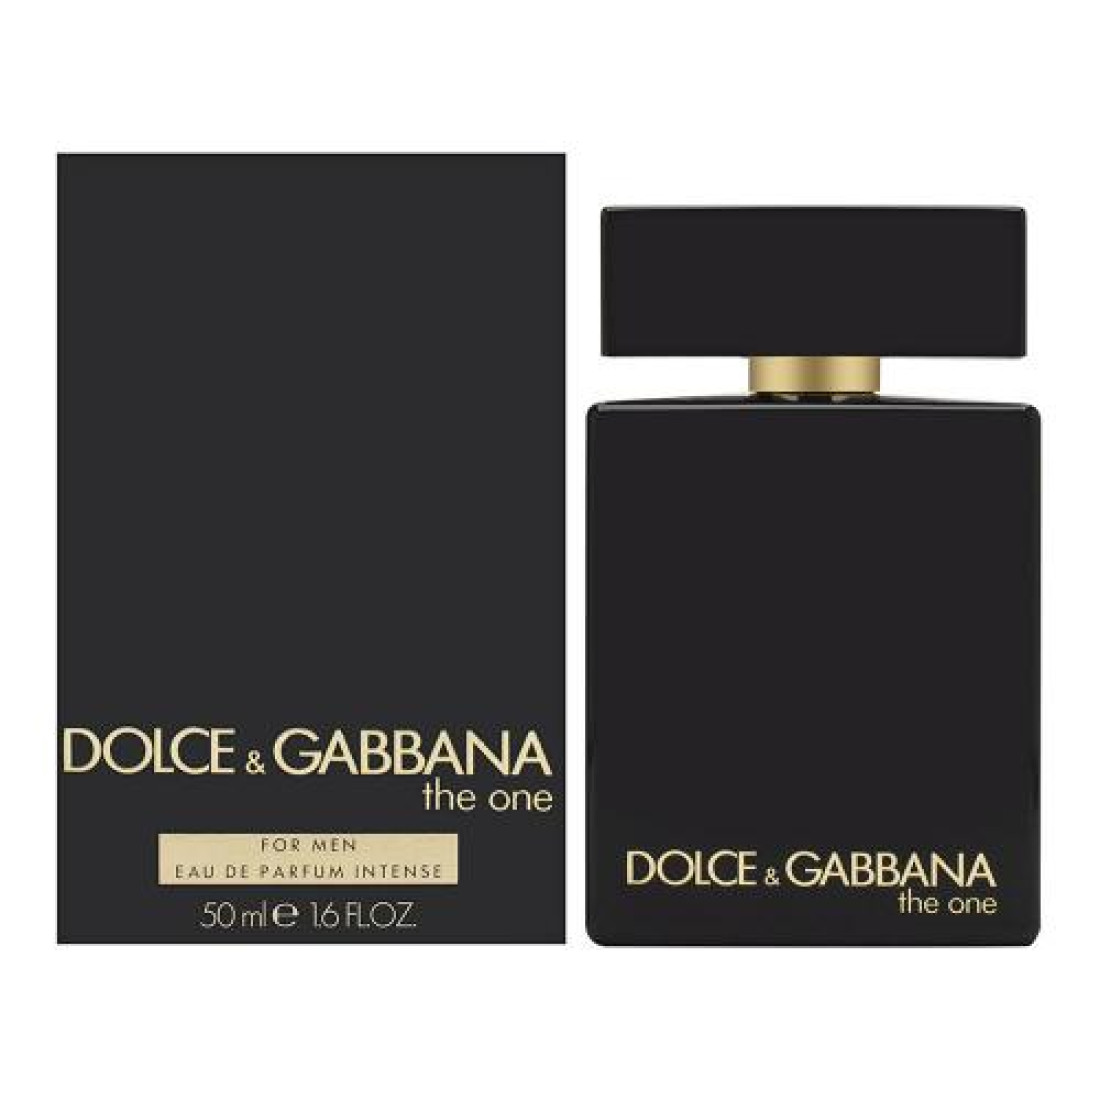 Дольче интенс мужские. Dolce Gabbana the one intense man 50ml EDP. Dolce Gabbana the one intense мужской. Dolce & Gabbana the one for men intense EDP (50 мл). Dolce Gabbana the one for men Eau de Parfum.